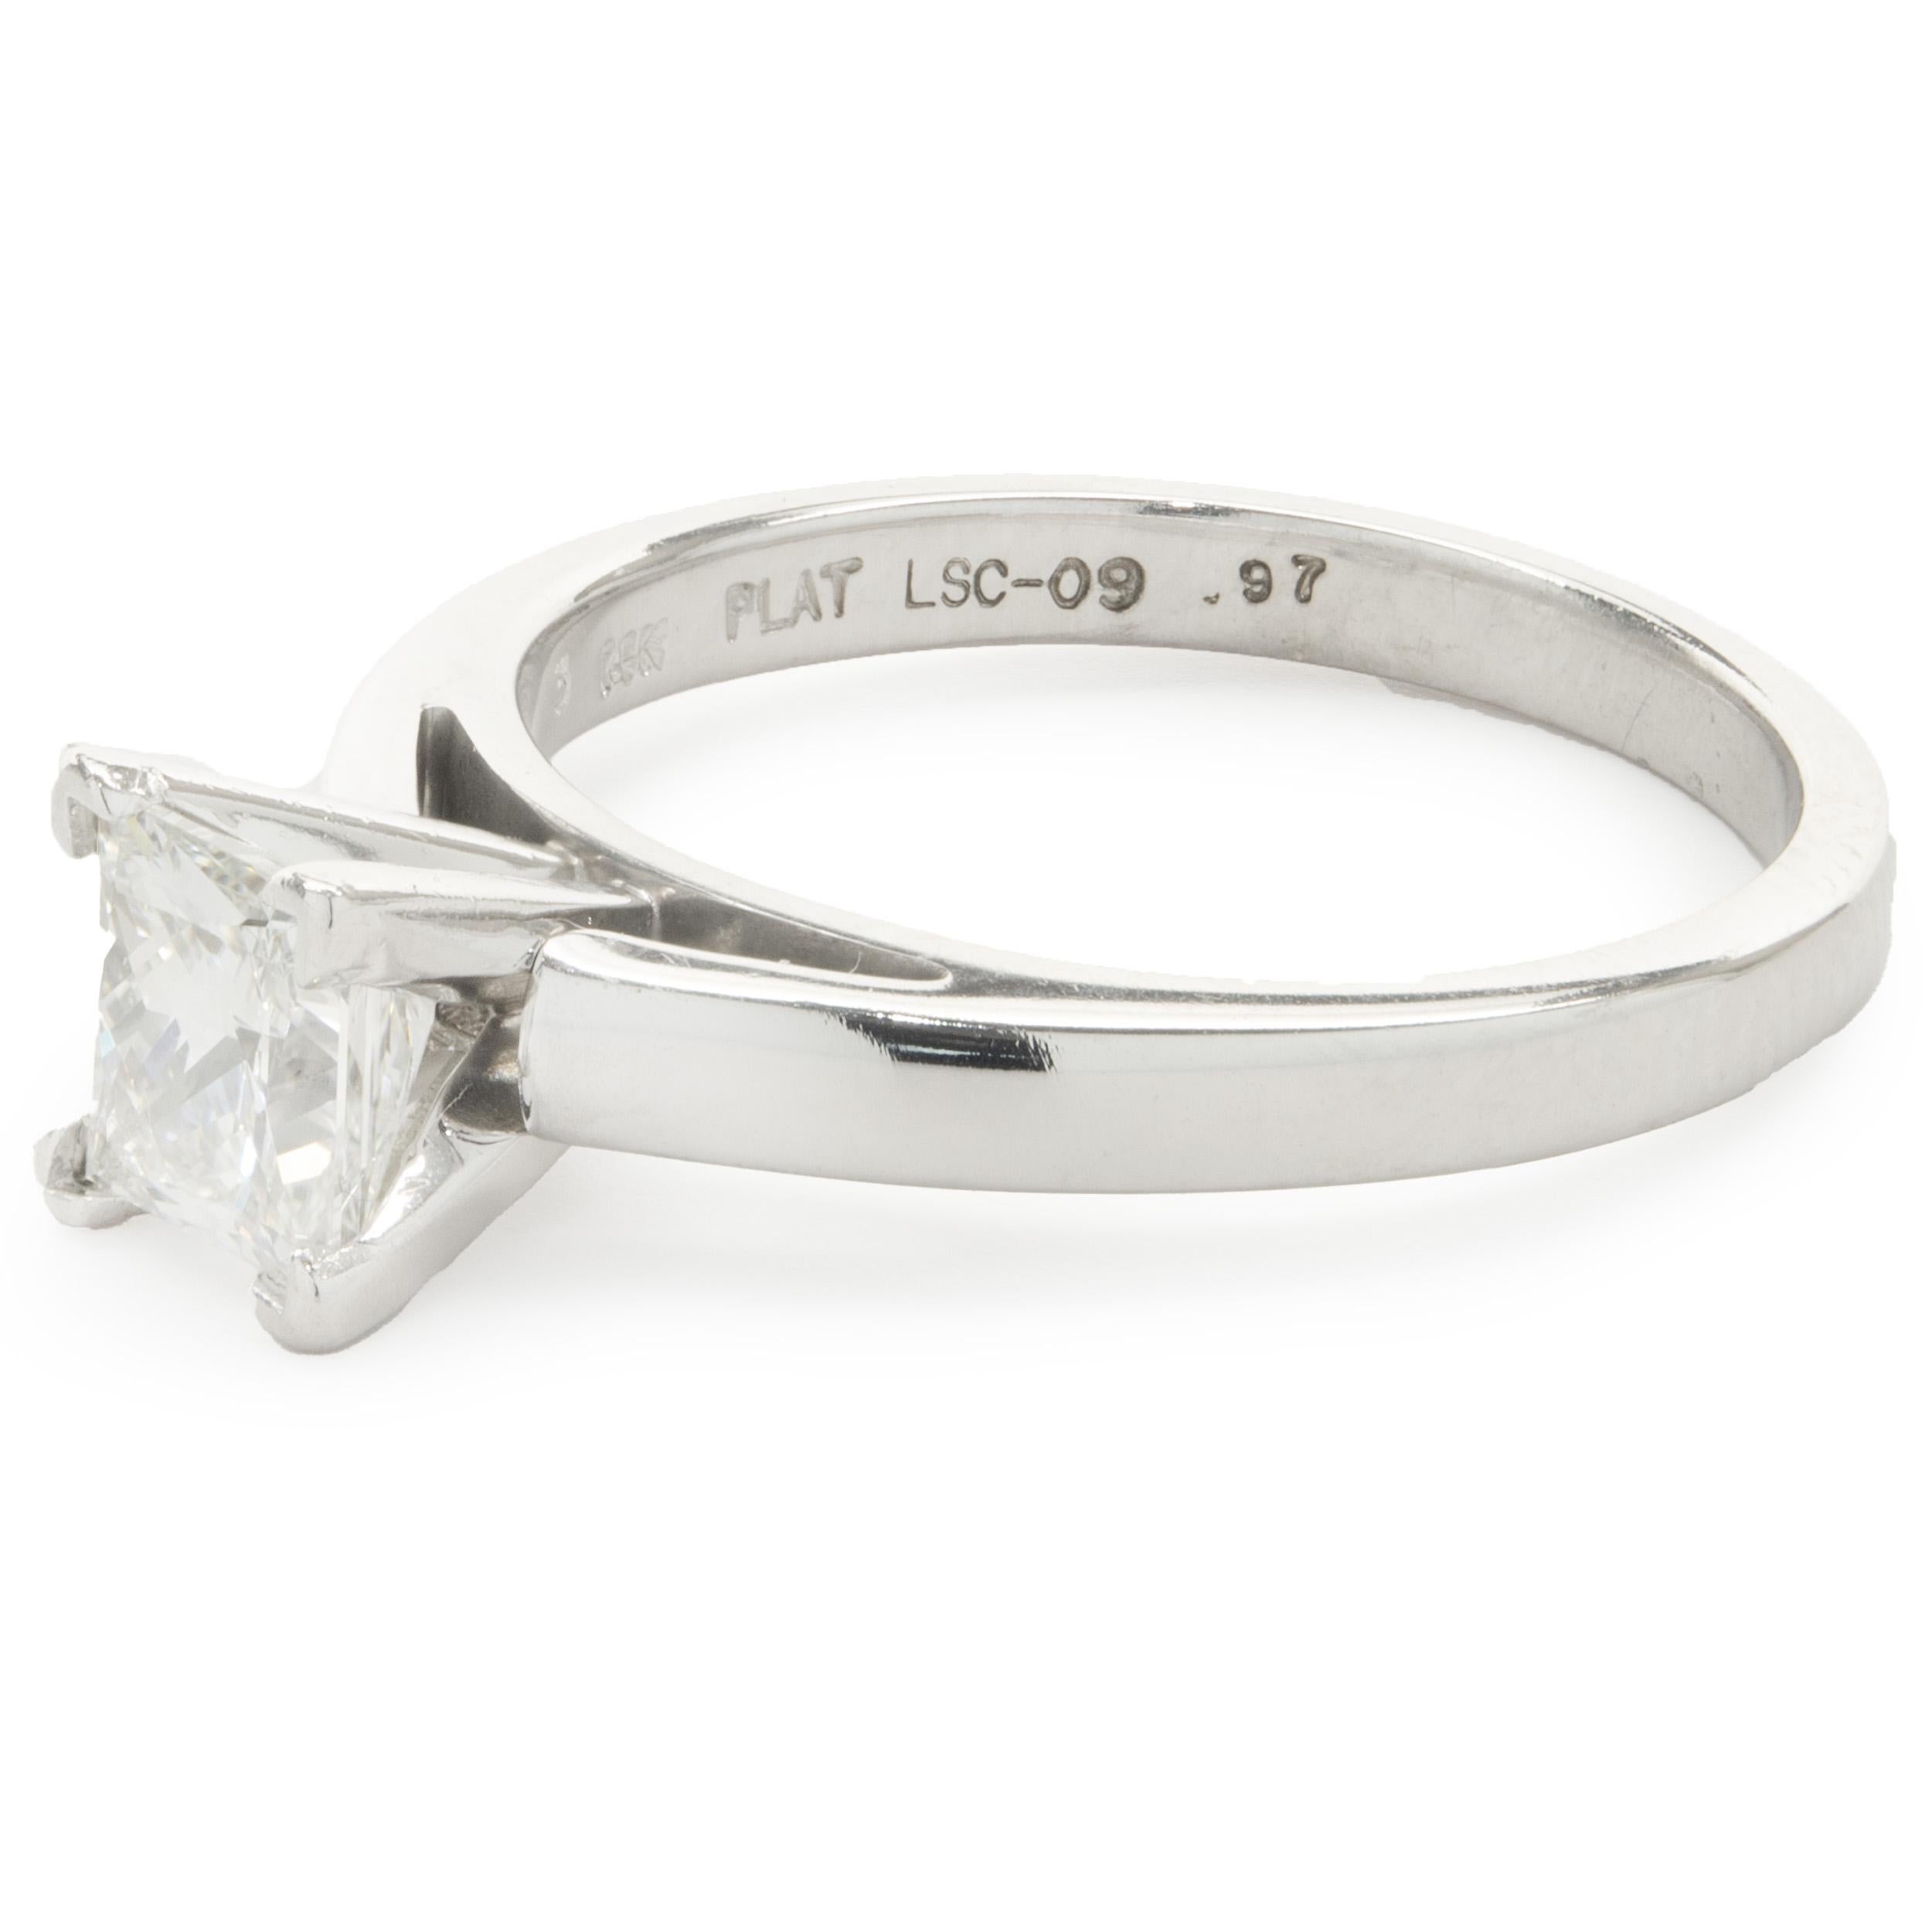 Platinum Princess Cut Leo Diamond Engagement Ring In Excellent Condition For Sale In Scottsdale, AZ